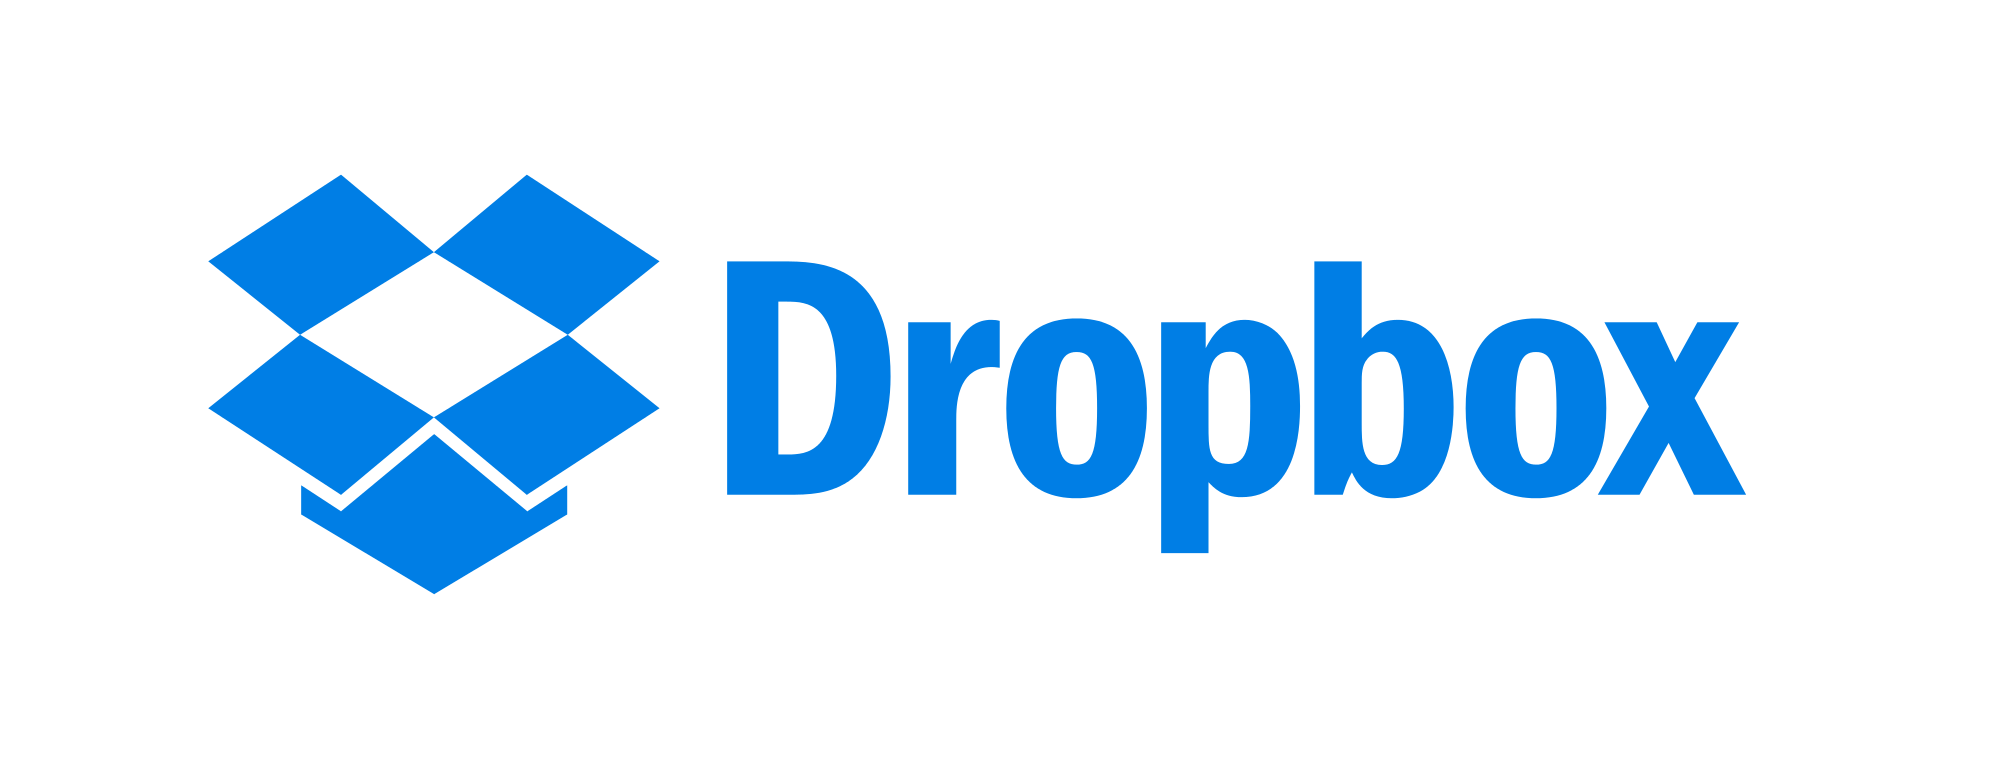 Dropbox_logo_(September_2013).svg.png